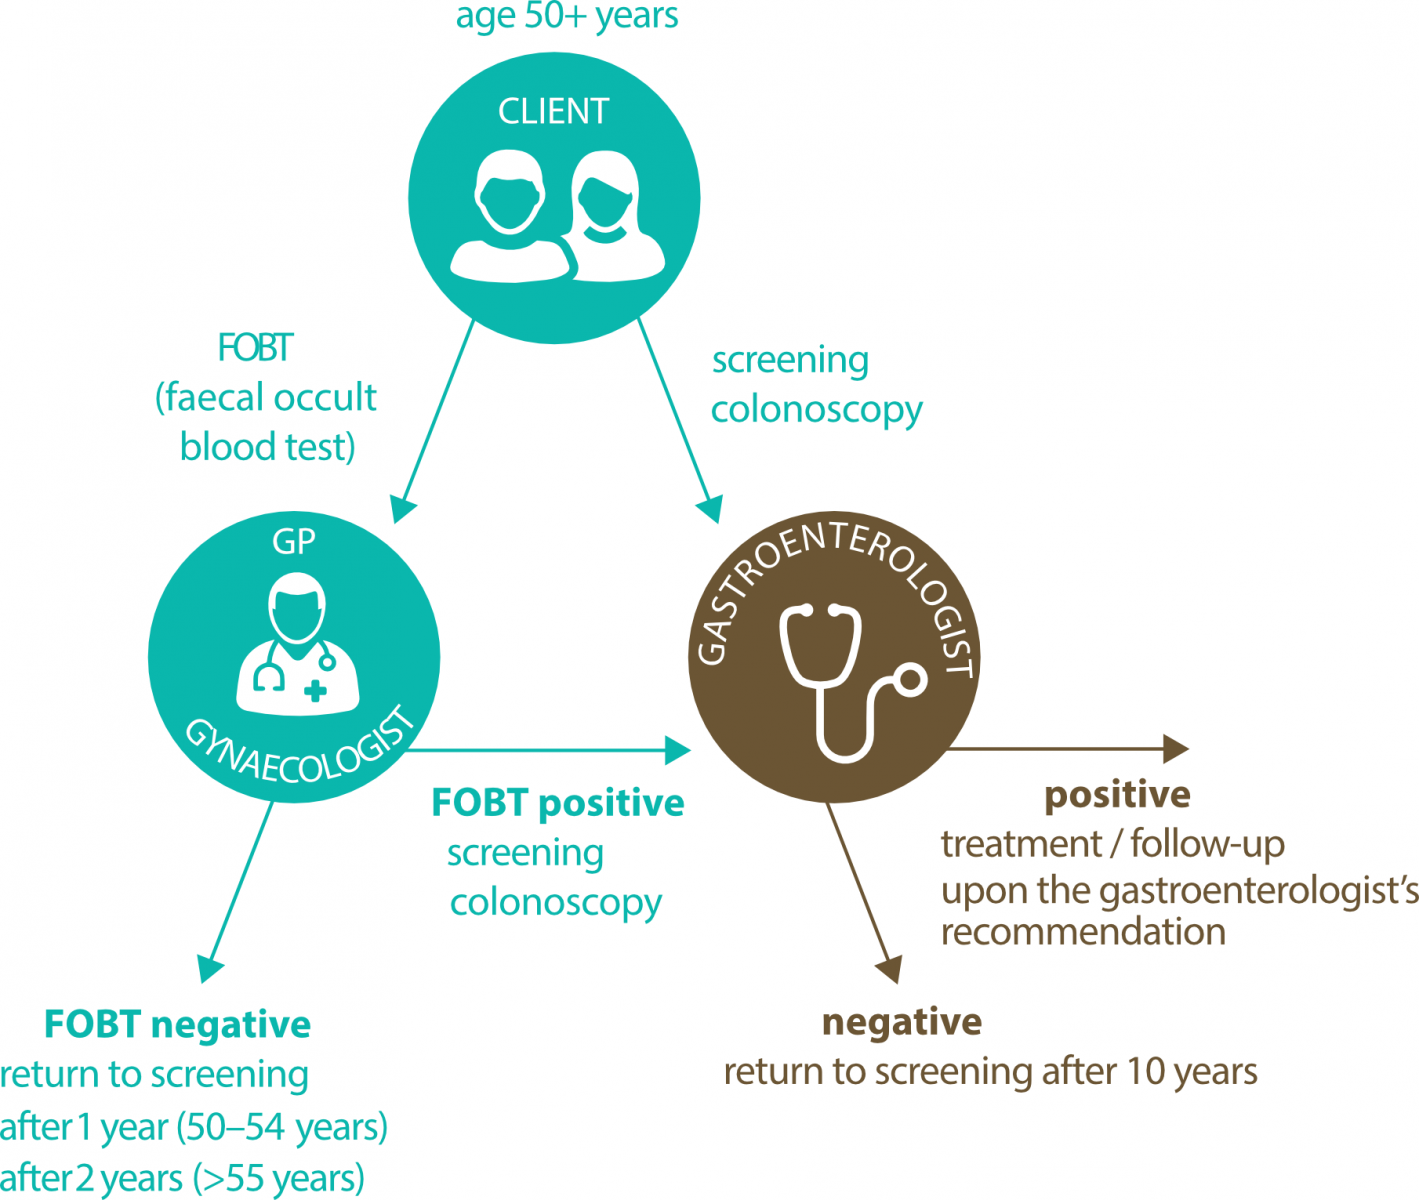 colorectal cancer screening process in the Czech Republic – schematic representation